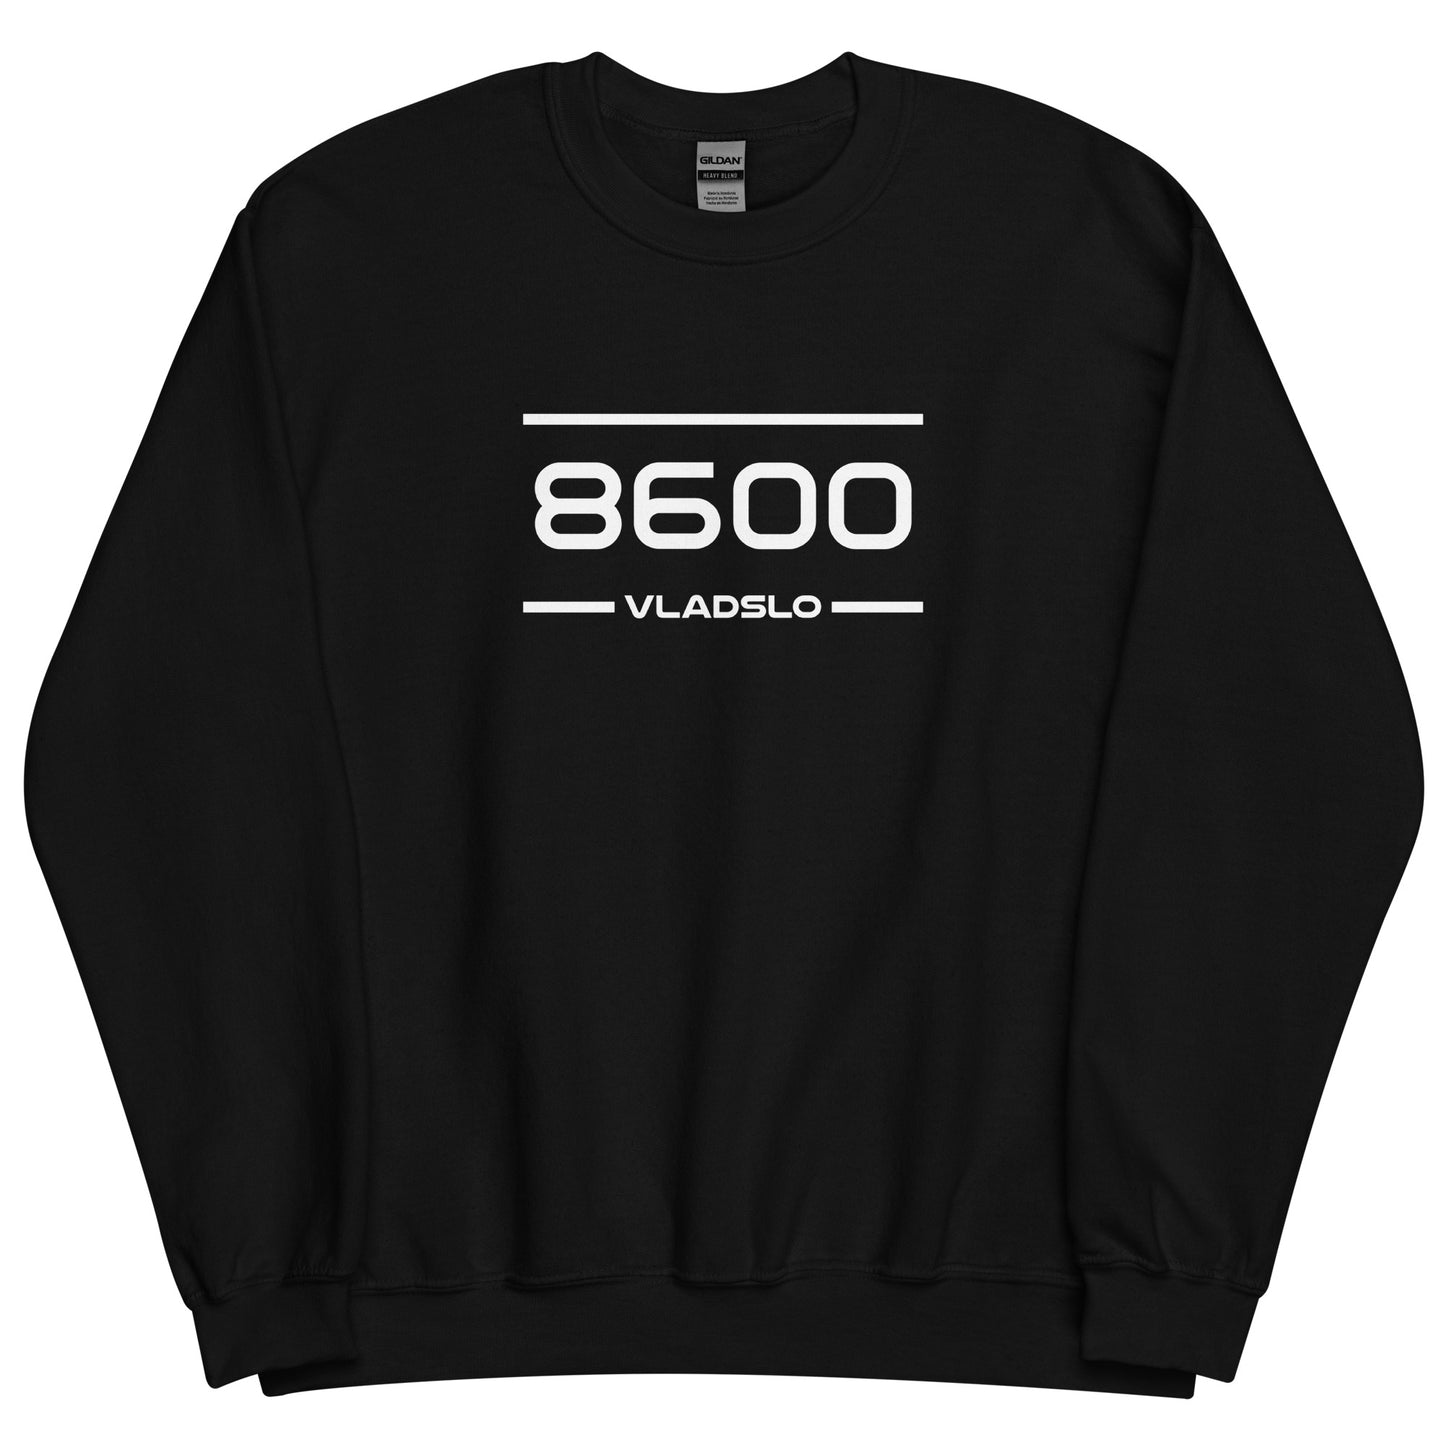 Sweater - 8600 - Vladslo (M/V)